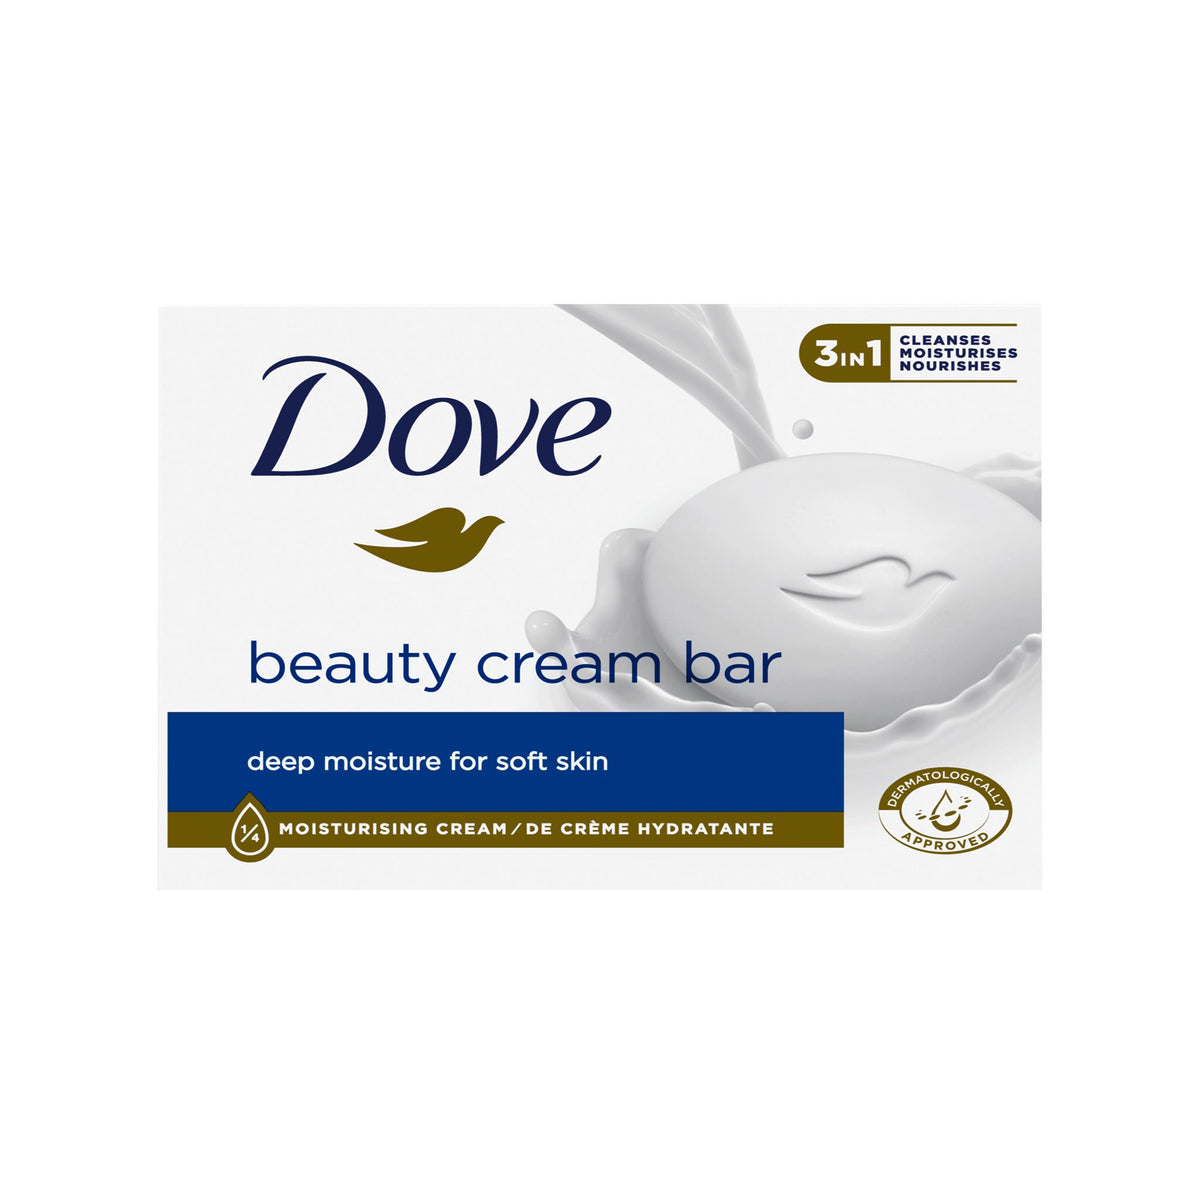 Dove Beauty Cream Bar, White, Deep Moisture For Soft Skin - 90g